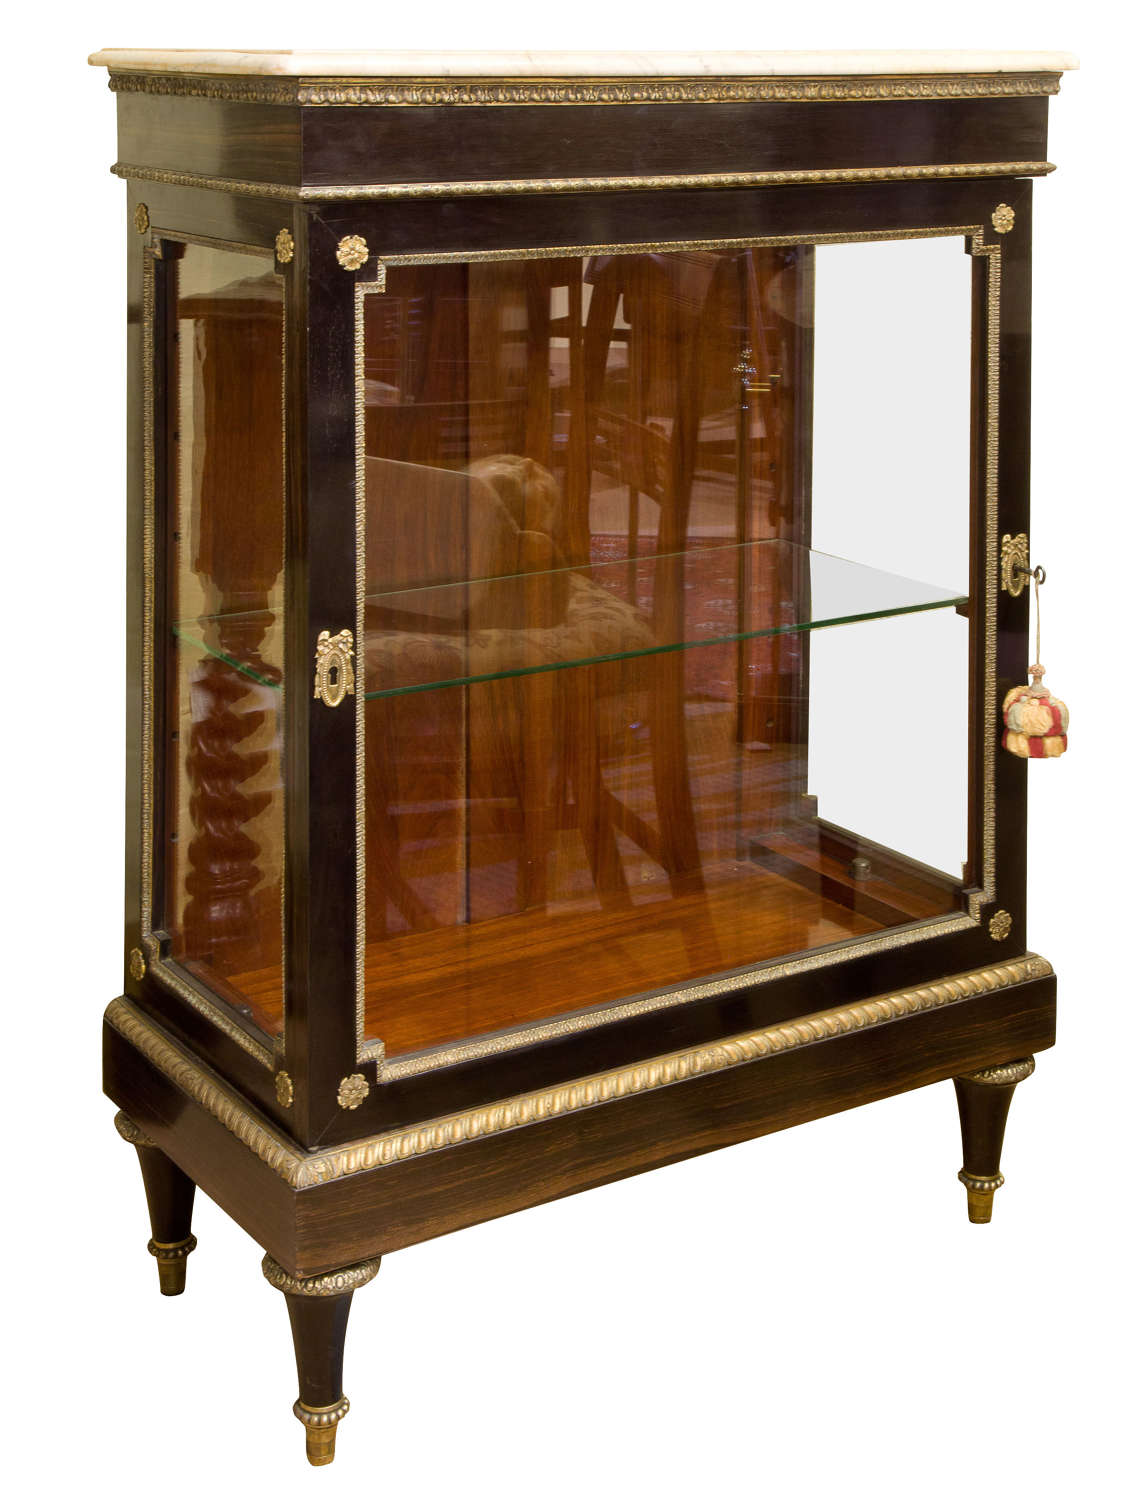 19thc French coromandel and mahogany display cabinet